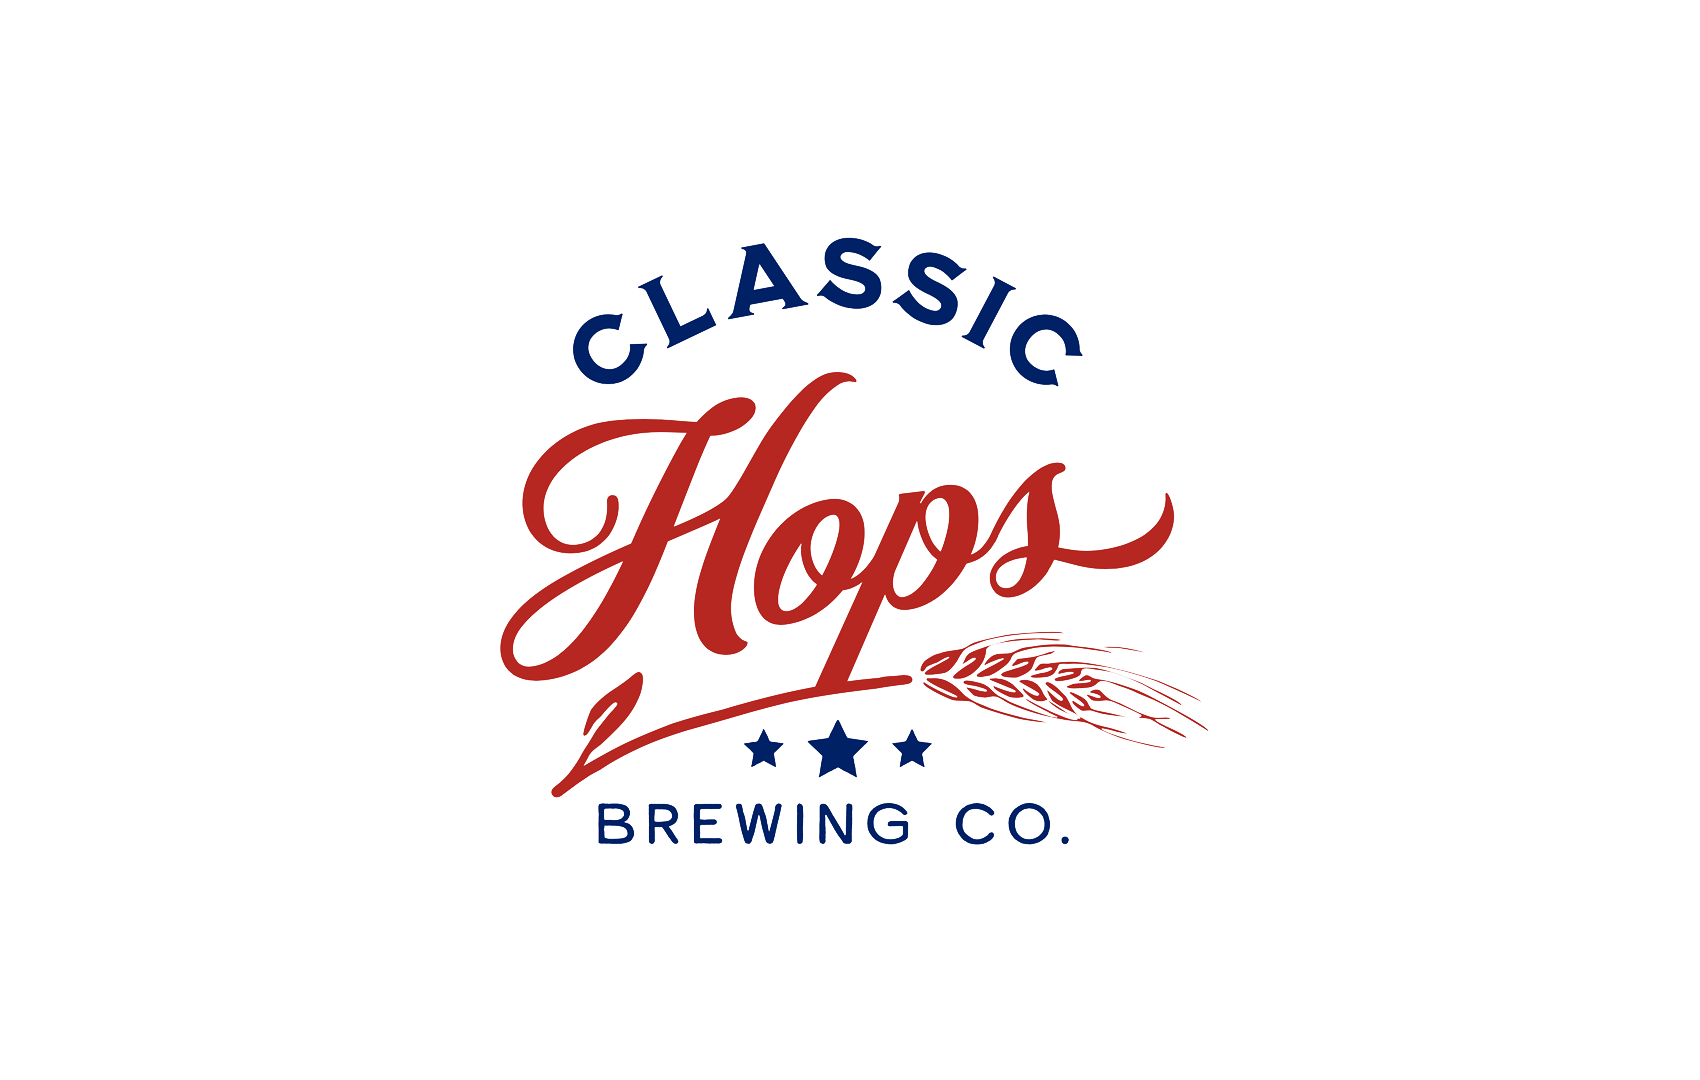 Classic Hops Brewing Company